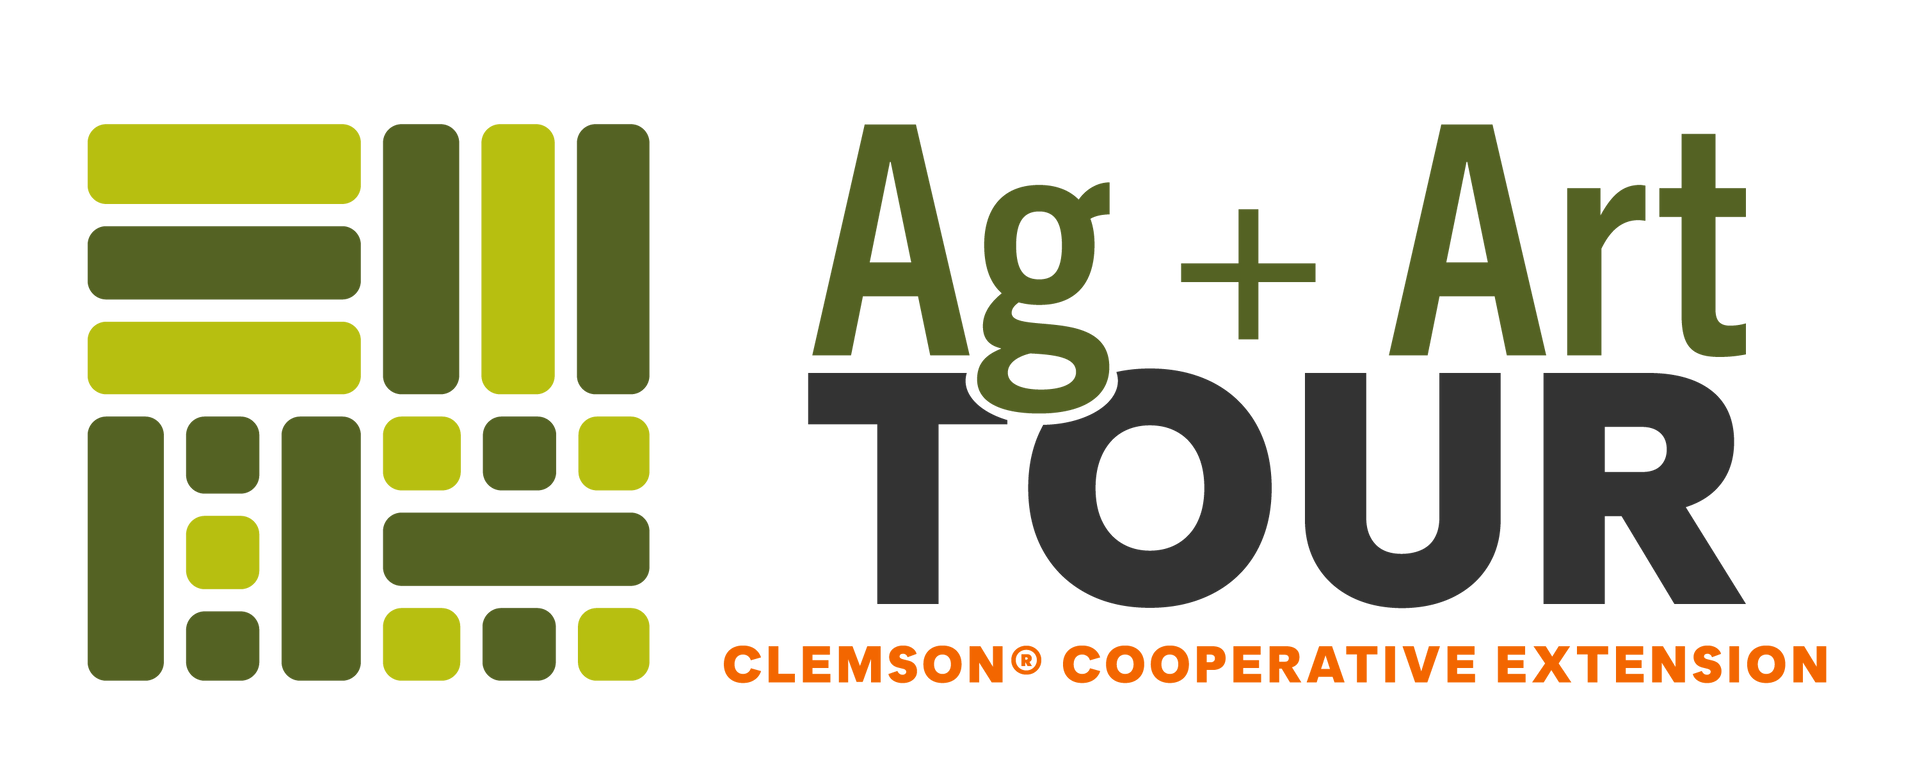 farm tour companies